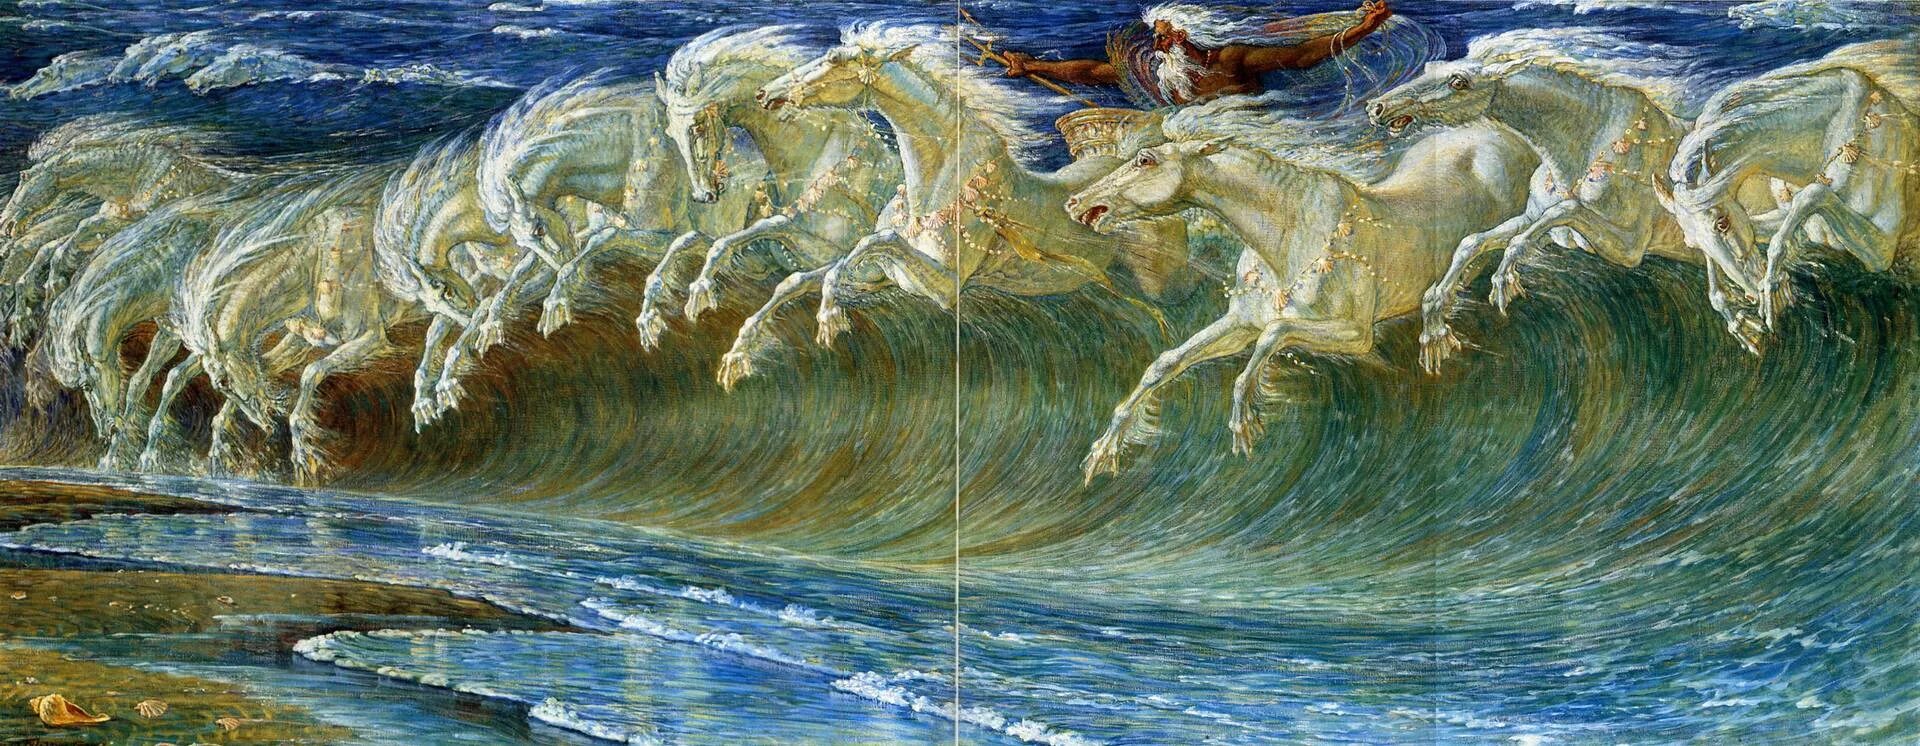 Утер крайн кони Нептуна. Уолтер Крейн кони Посейдона. Уолтер Крейн лошади Нептуна. Уолтер Крейн (1845-1915).